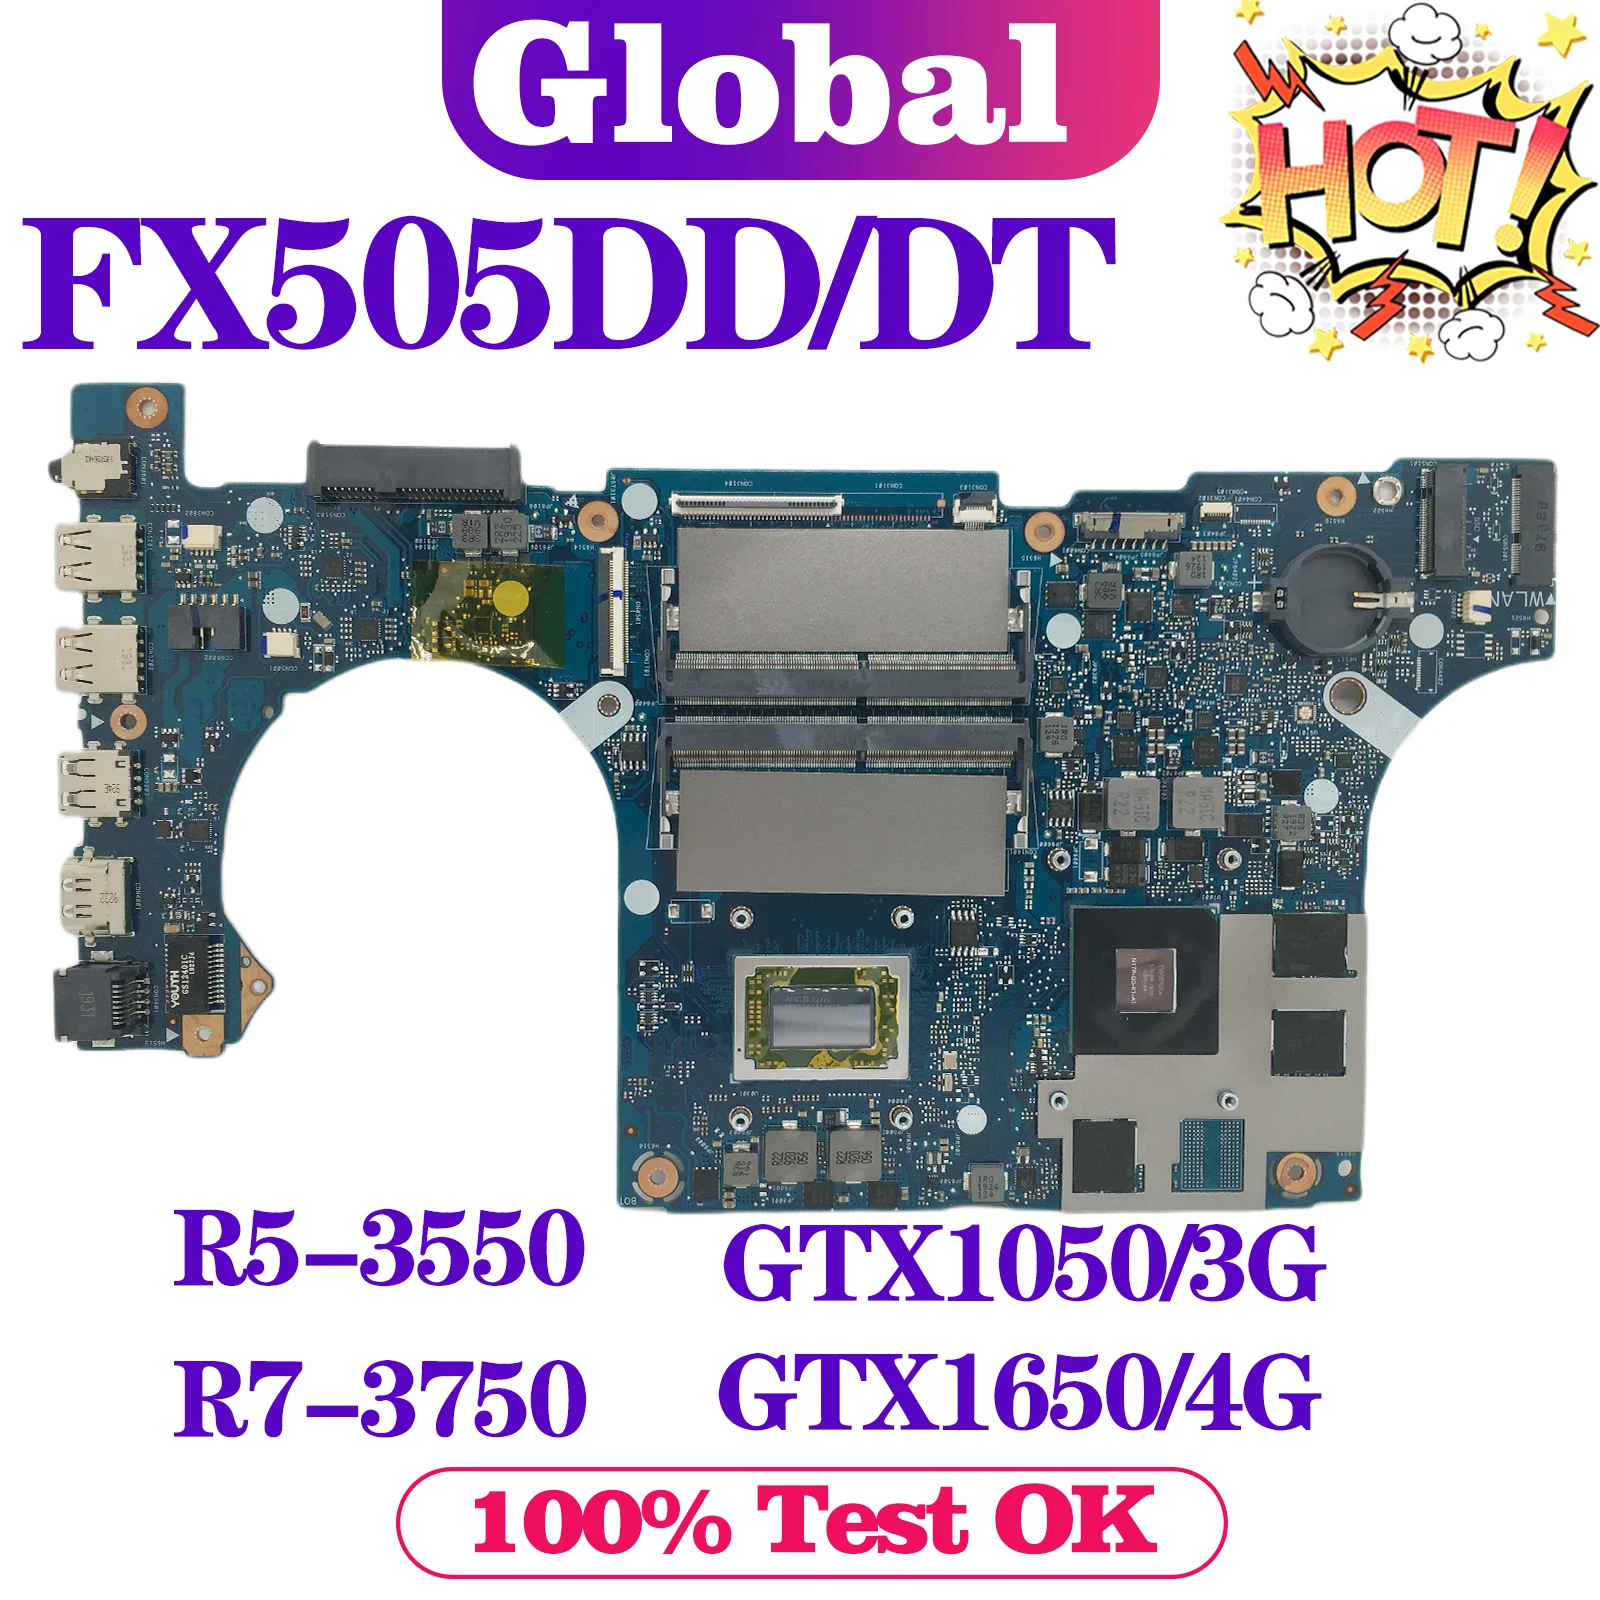 

FX505D Laptop Motherboard FX505DT FX95DT FX95D FX505DD FX705DD FX705DT Mainboard AMD Ryzen R5-3550 R7-3750 GTX1650/GTX1050